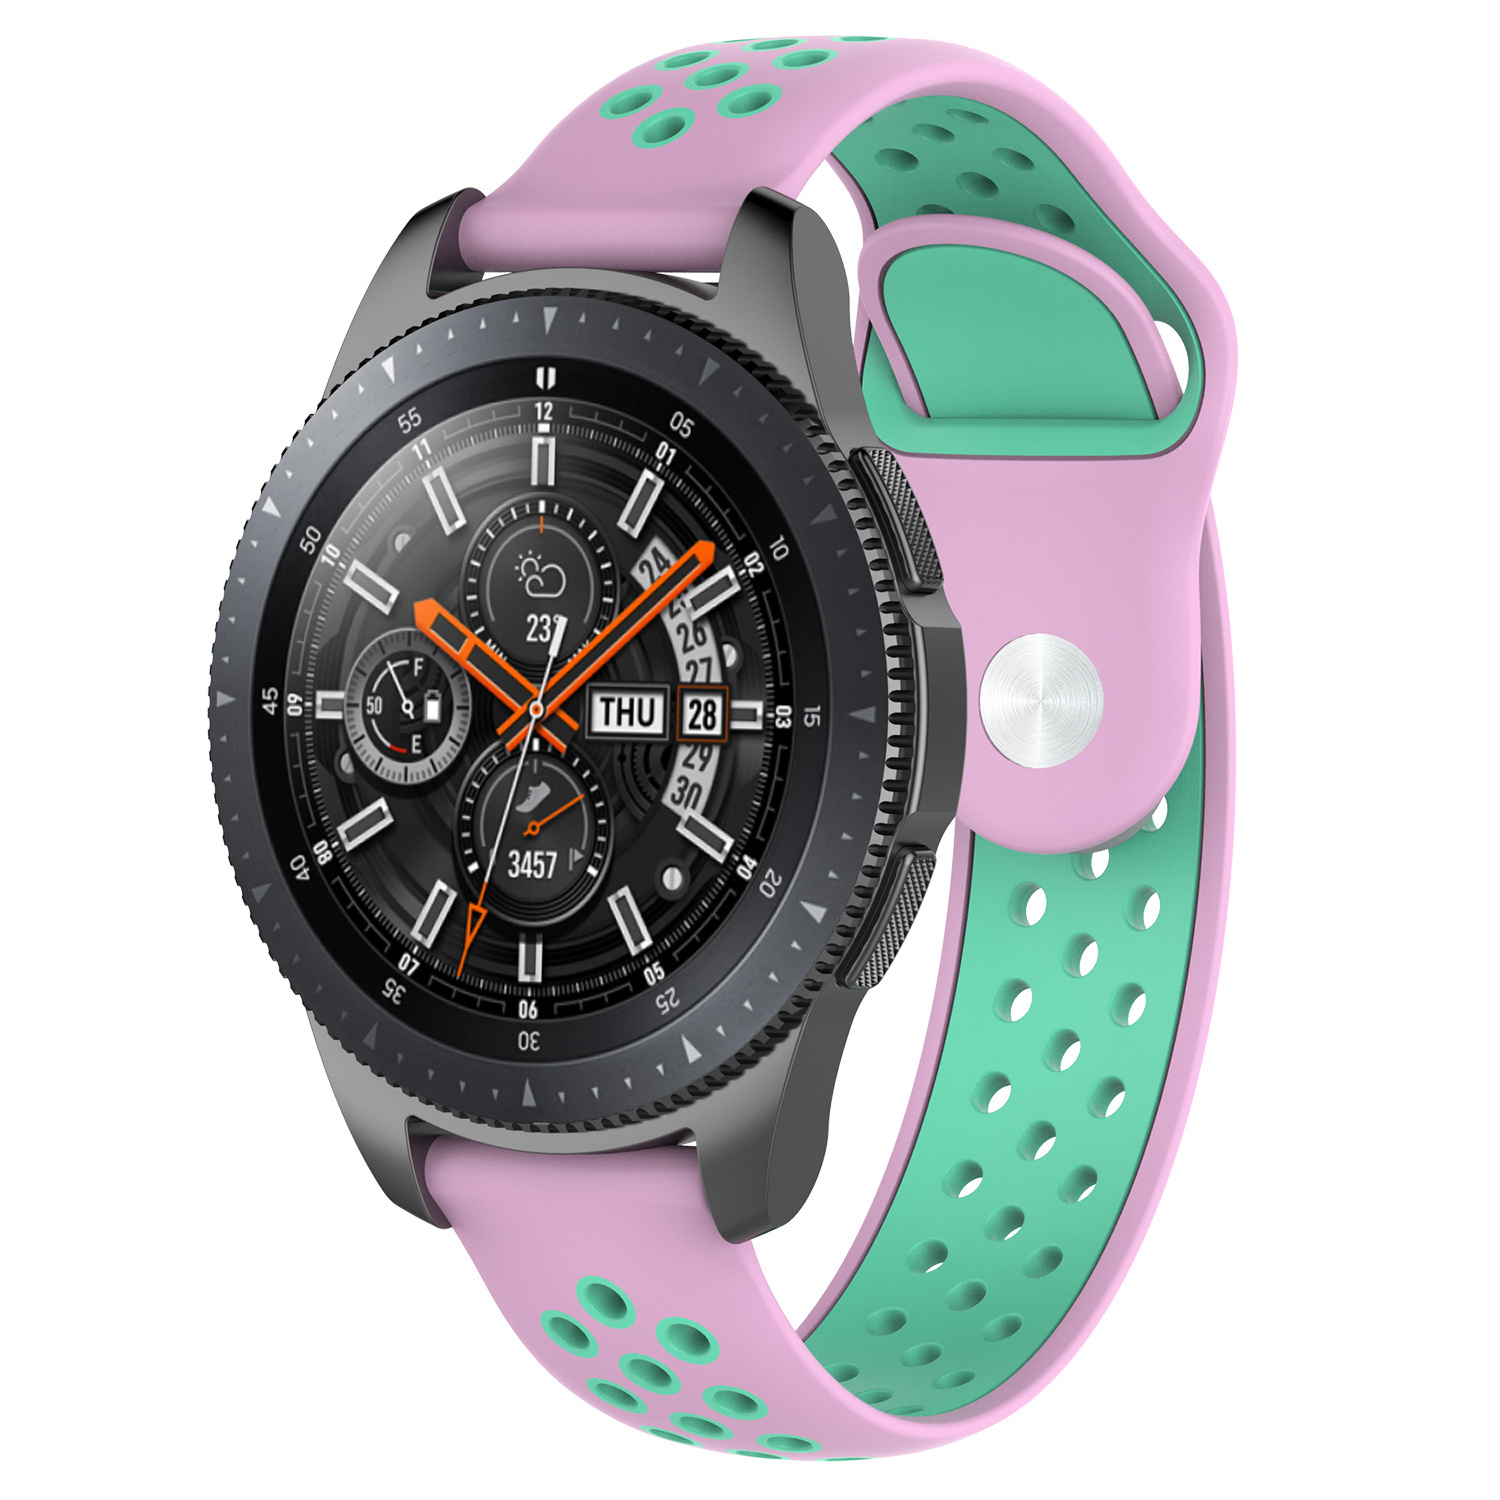 Correa deportiva doble para el Huawei Watch GT - rosa teal